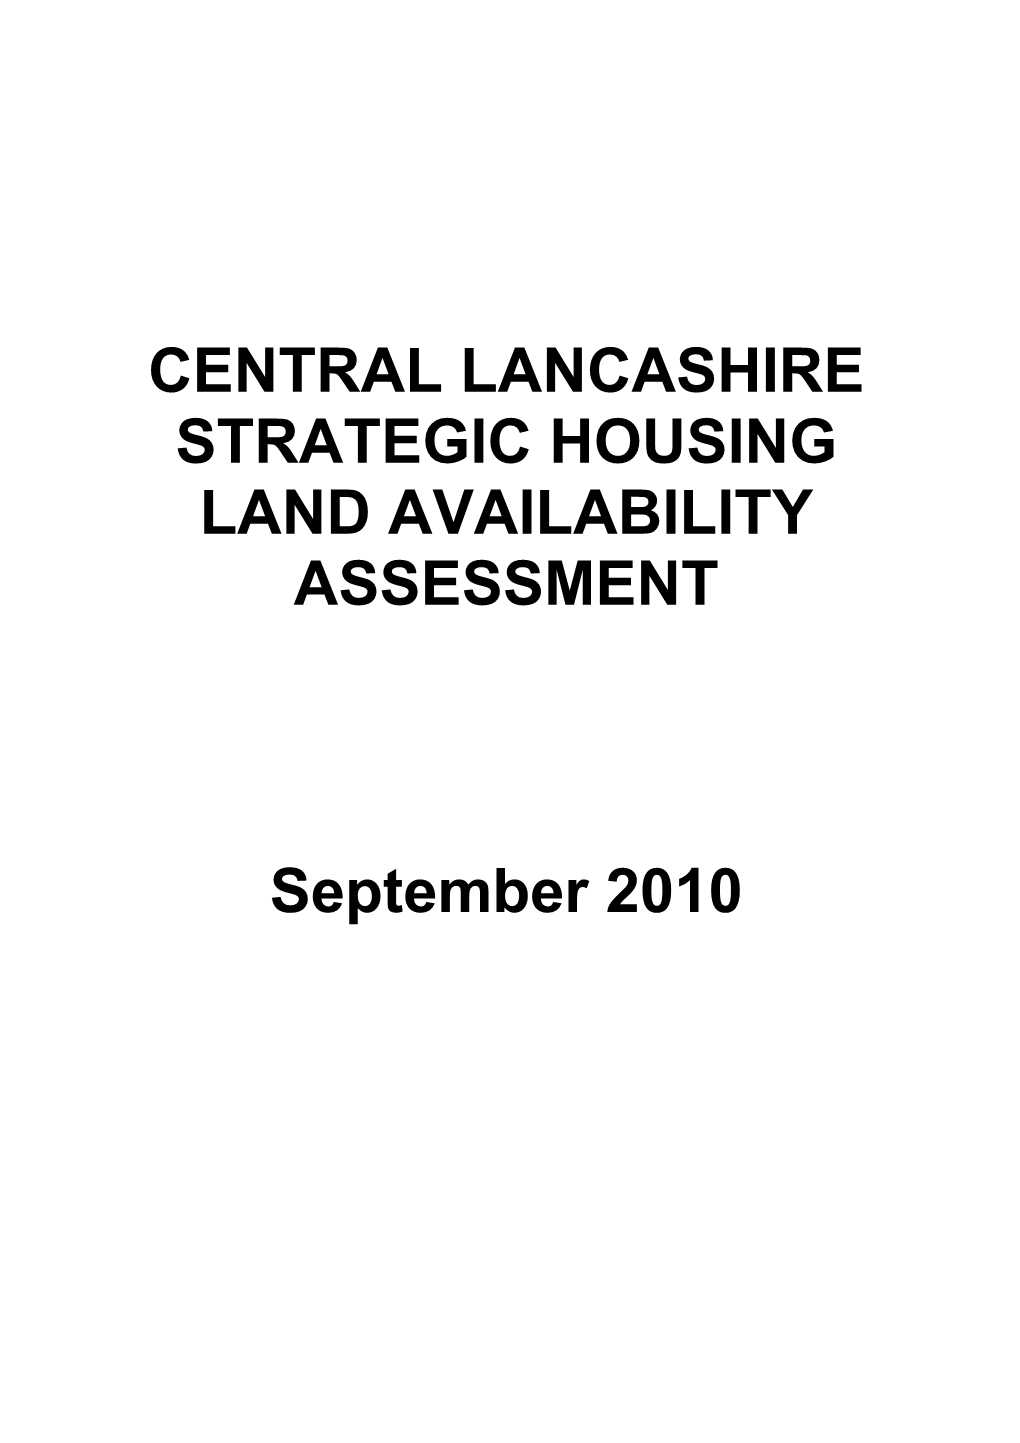 Central Lancashire Strategic Housing Land Availability Assessment Report